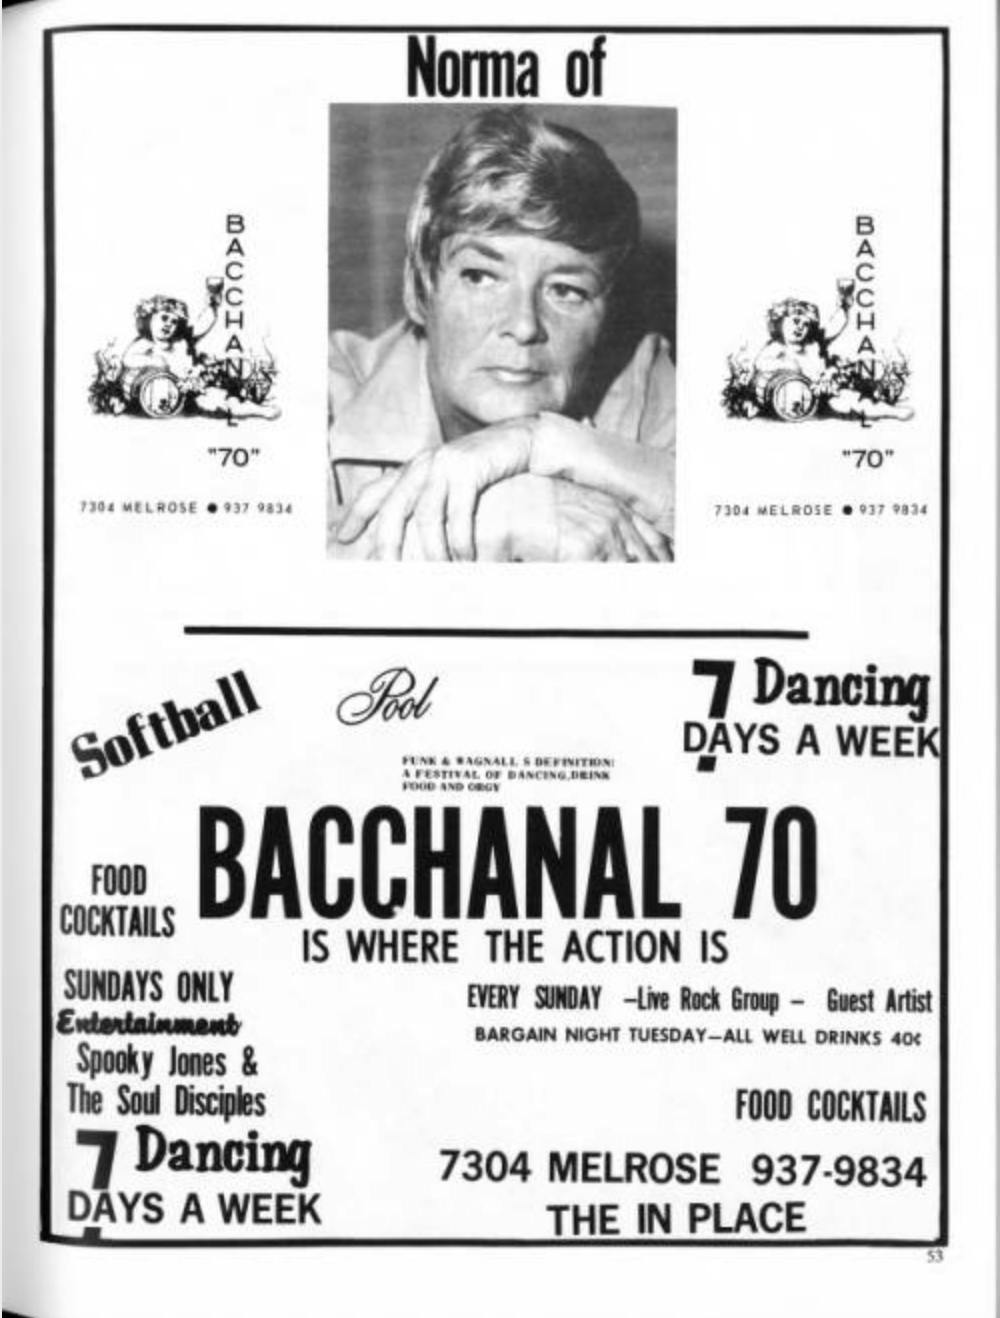 Bar advertisement in "the Voice" magazine 1970